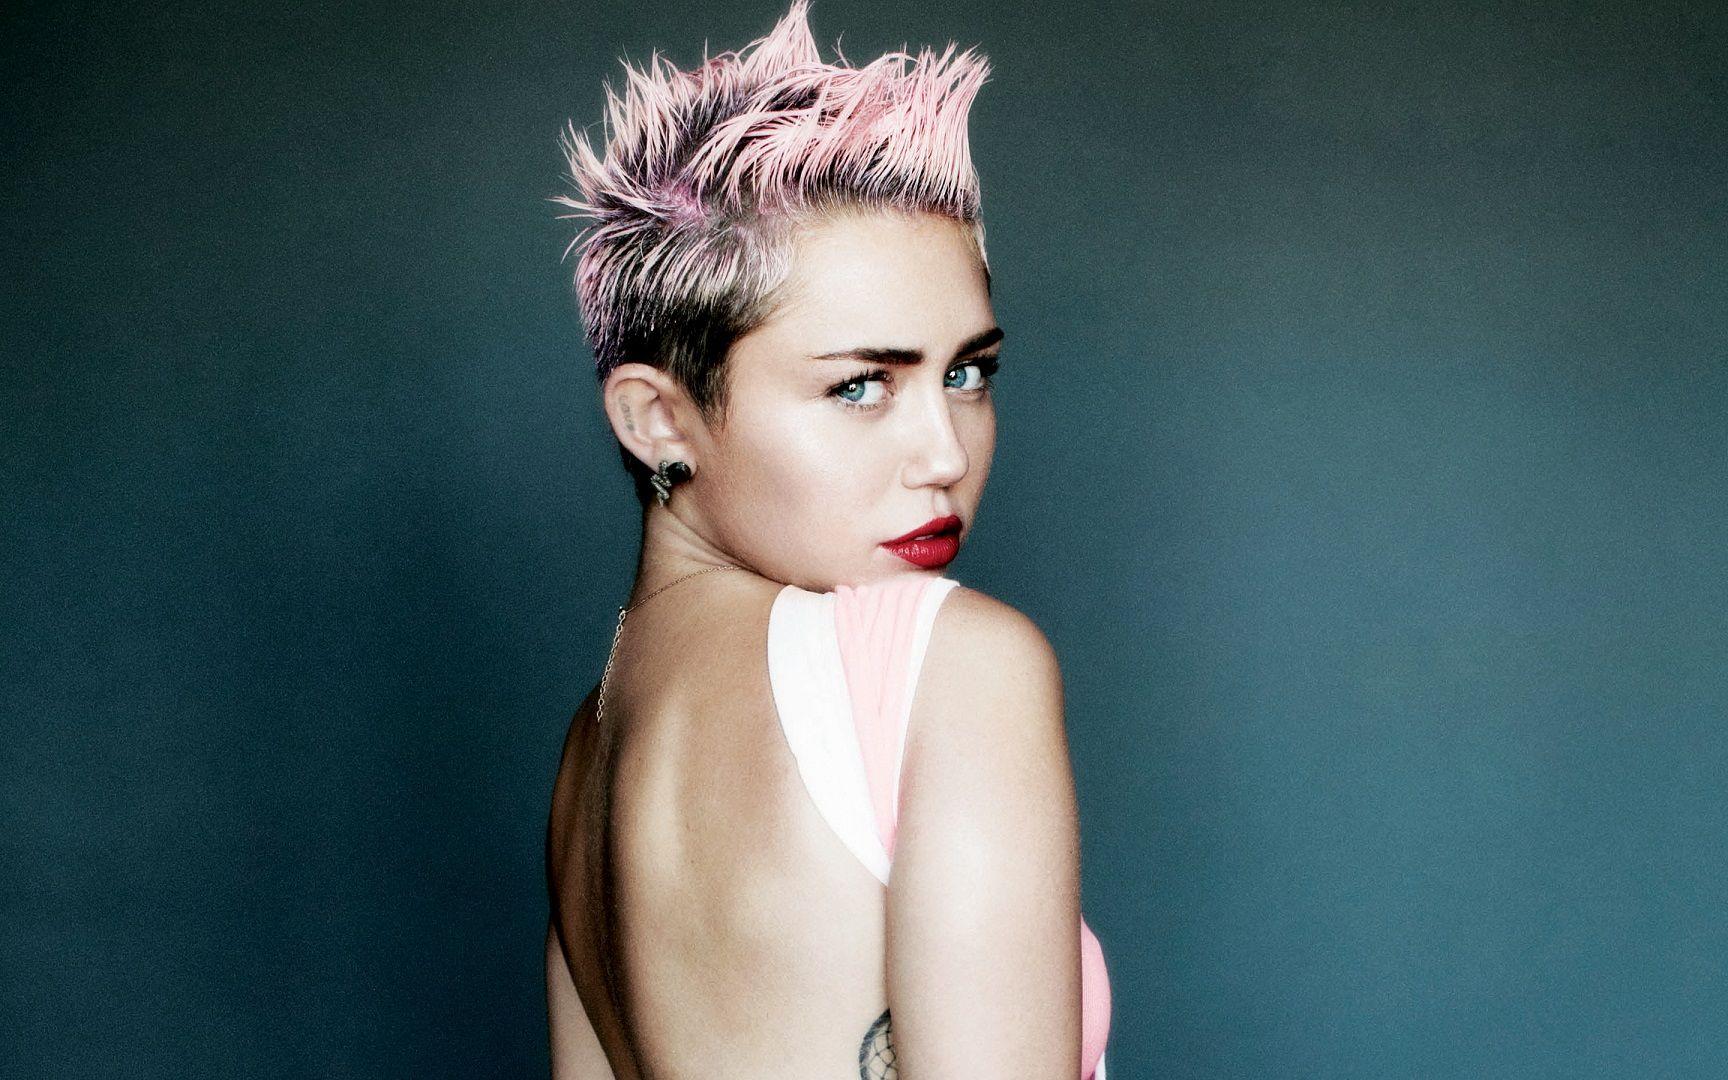 Miley Cyrus Wallpaper. Ultra High Quality Wallpaper